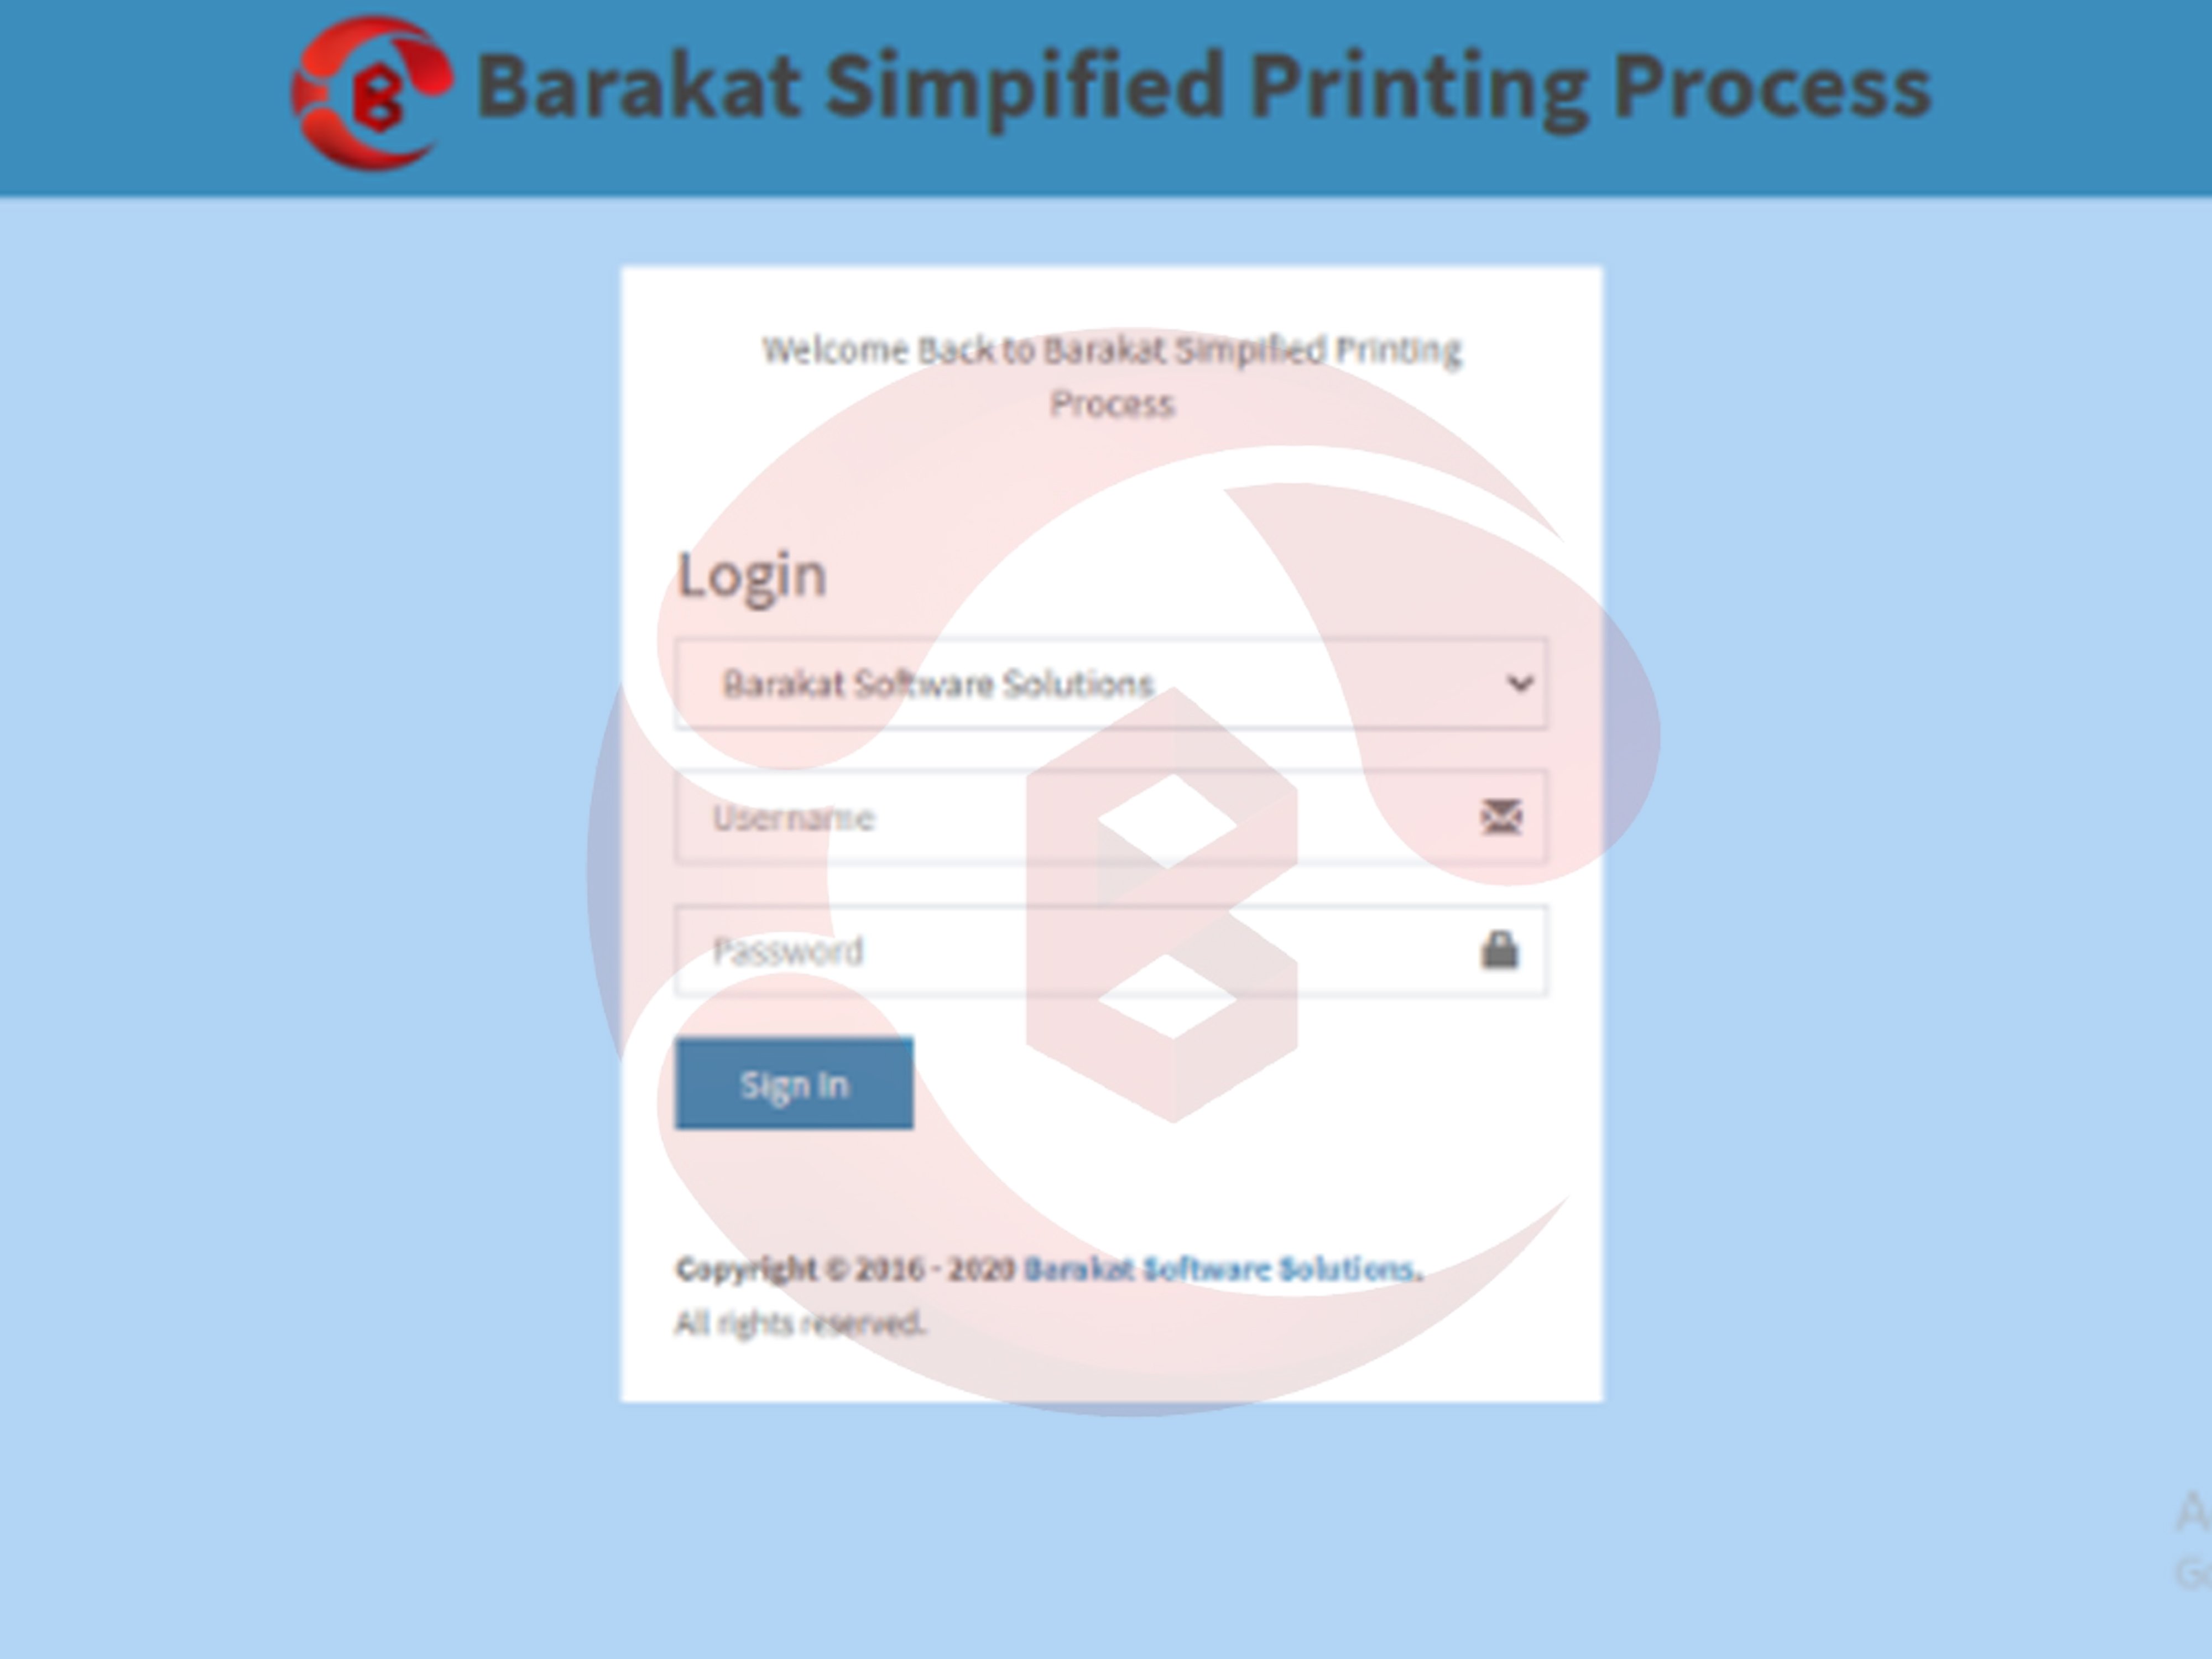 Barakat Simplified Printing Process / Barakat Software Solutions